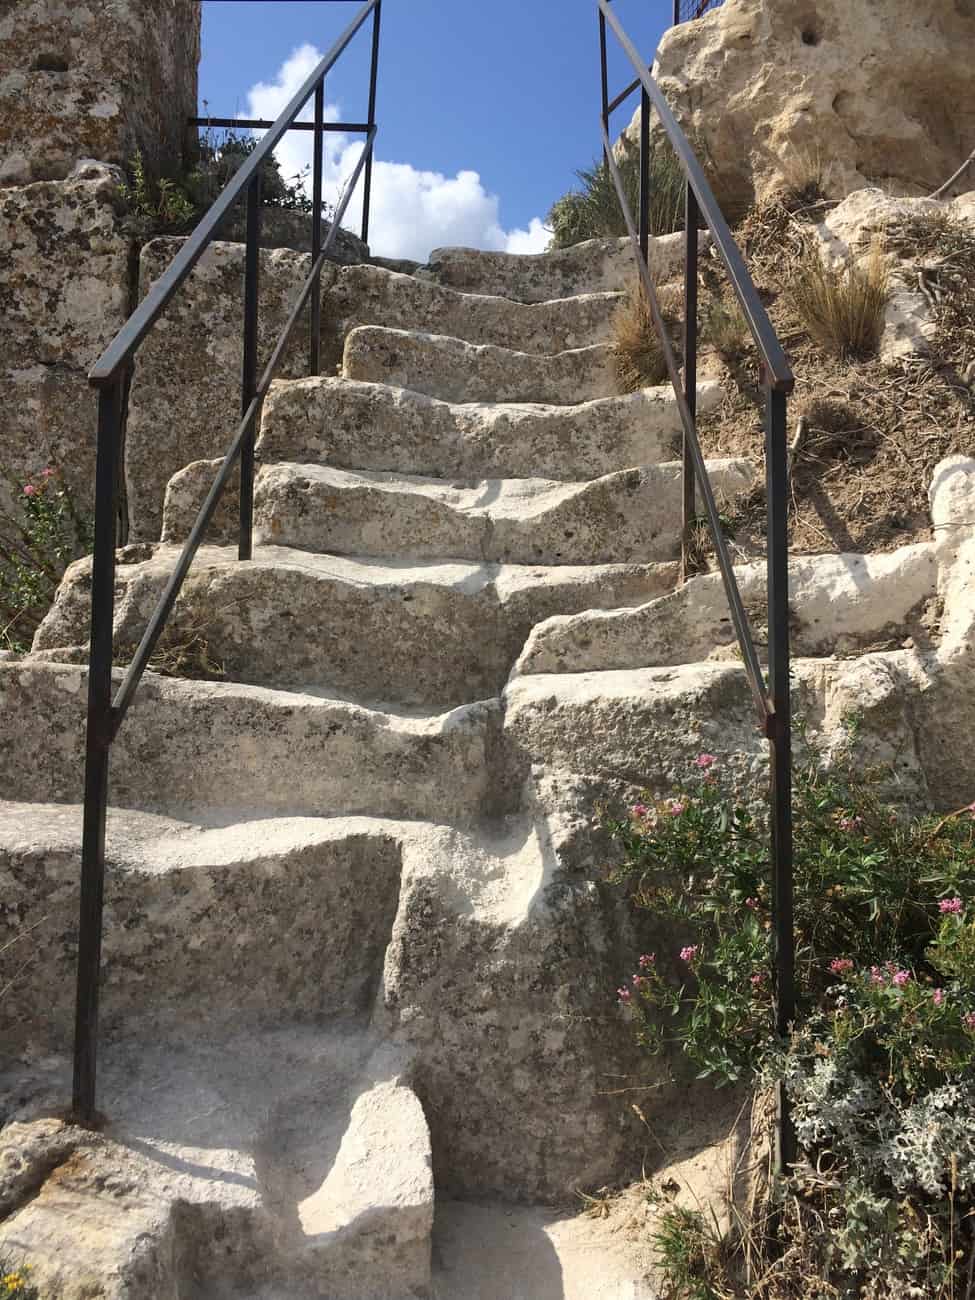 Les Baux - weathered steps